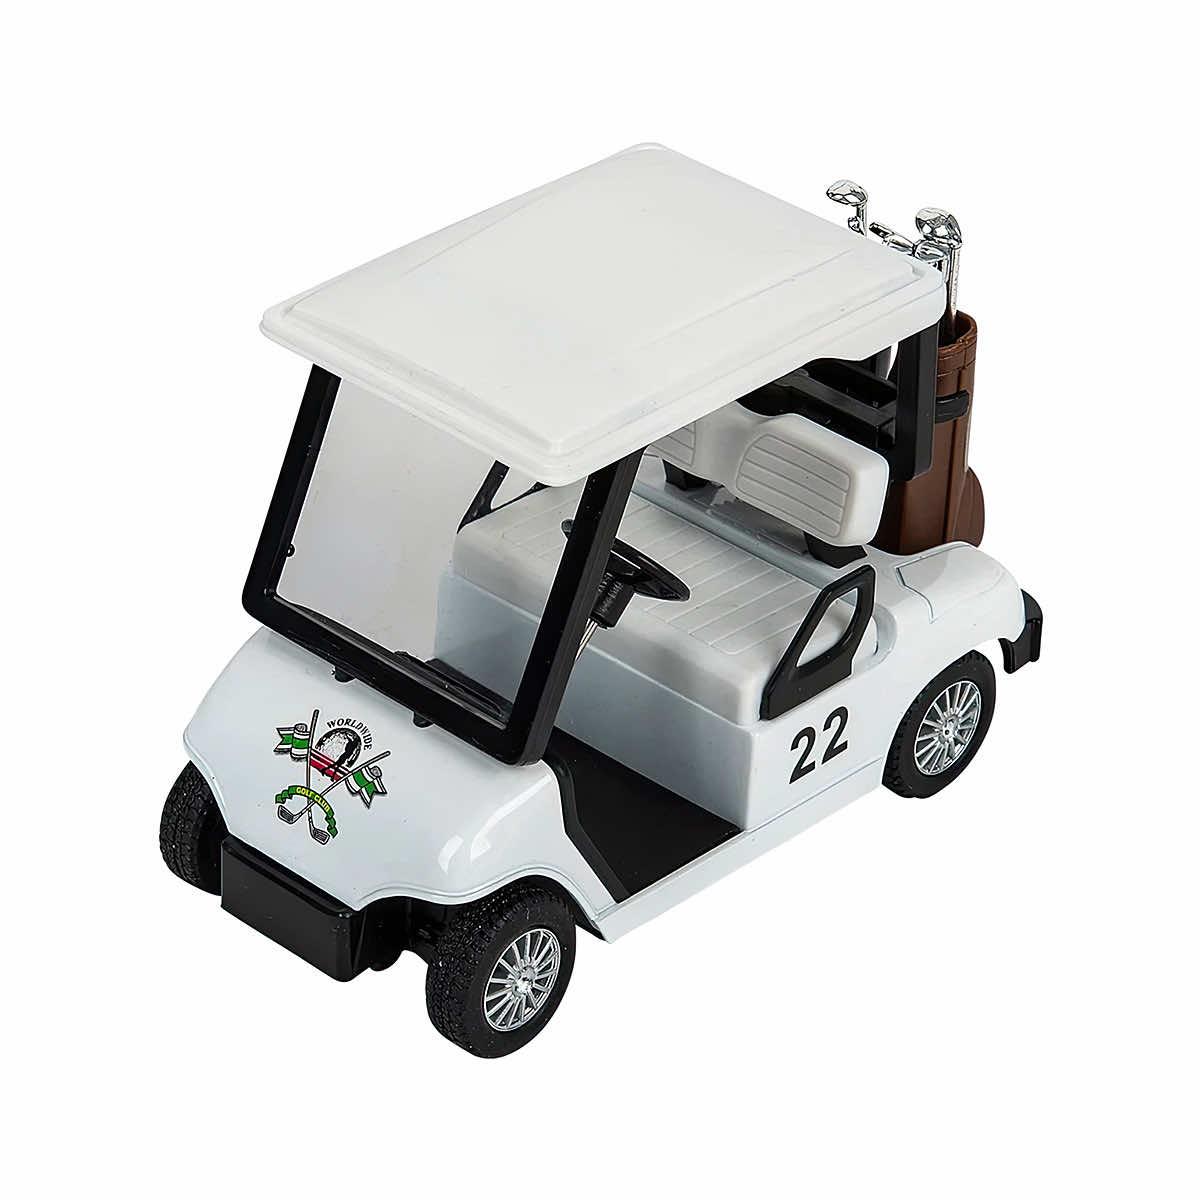 Golf Cart Model, Die-cast Toys